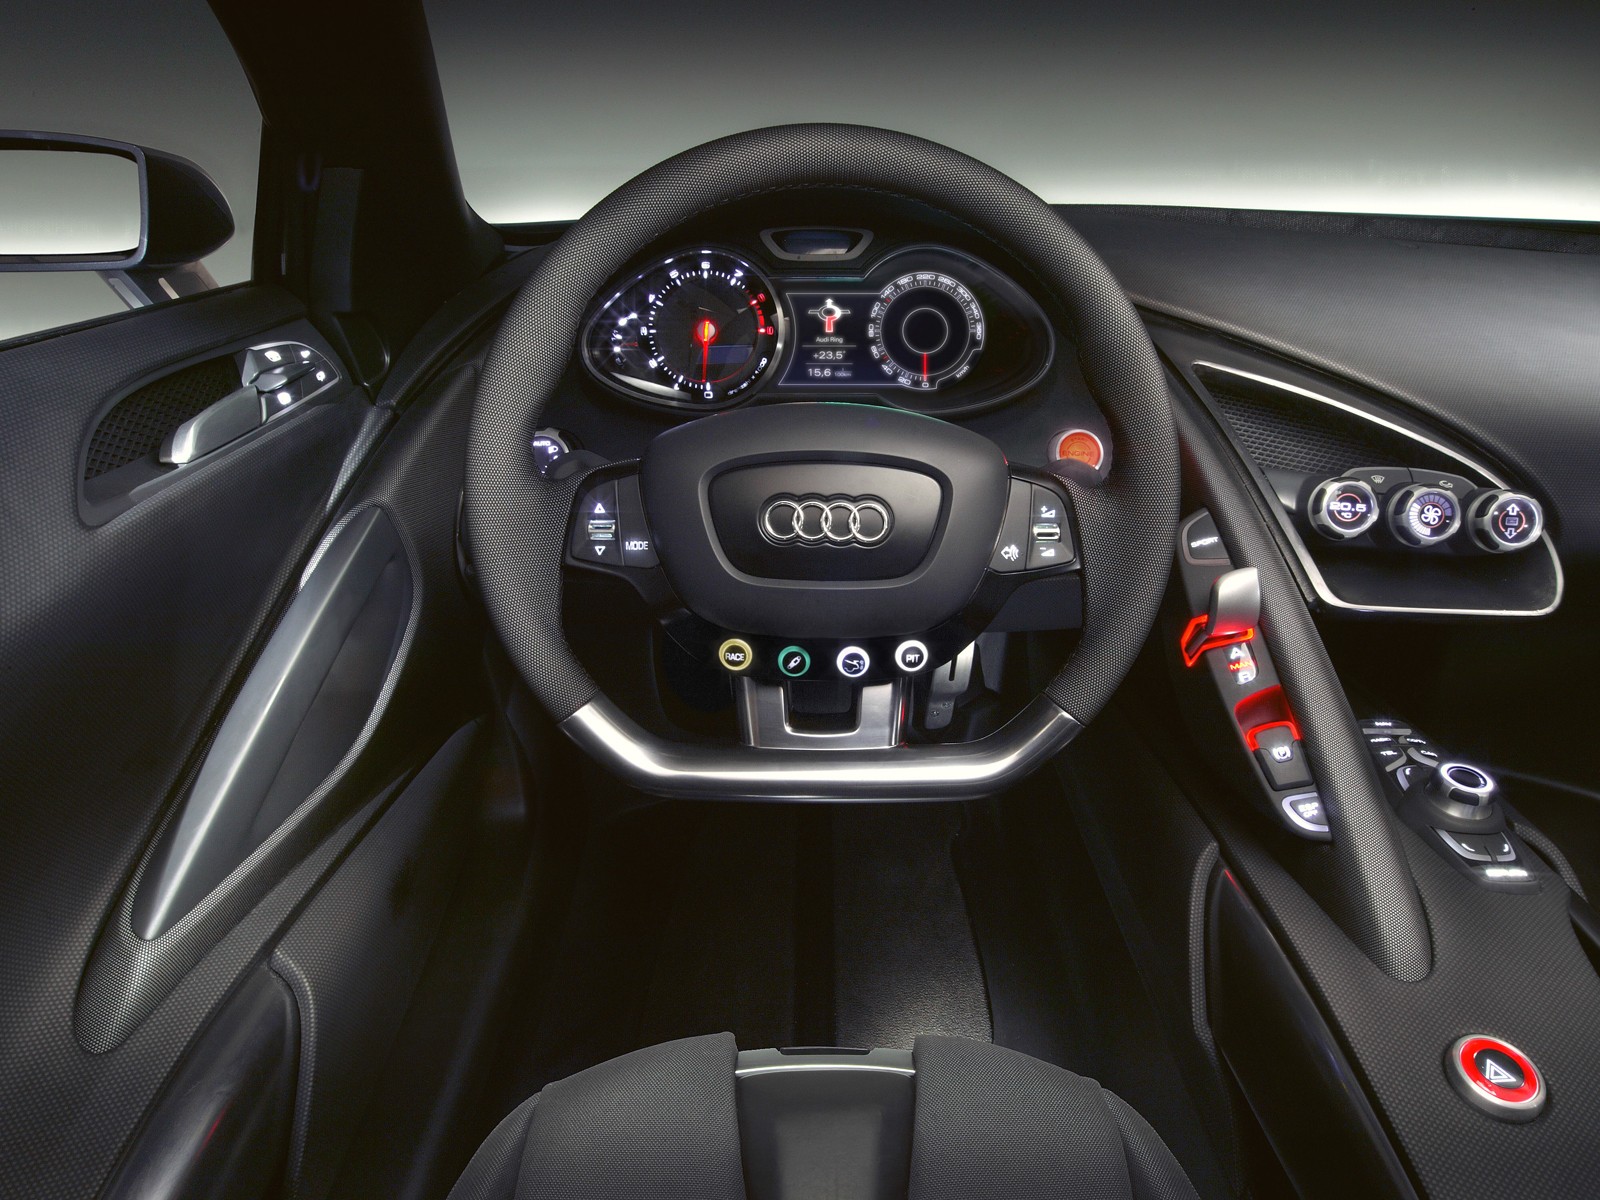 2003 Audi Le Mans Quattro Concept